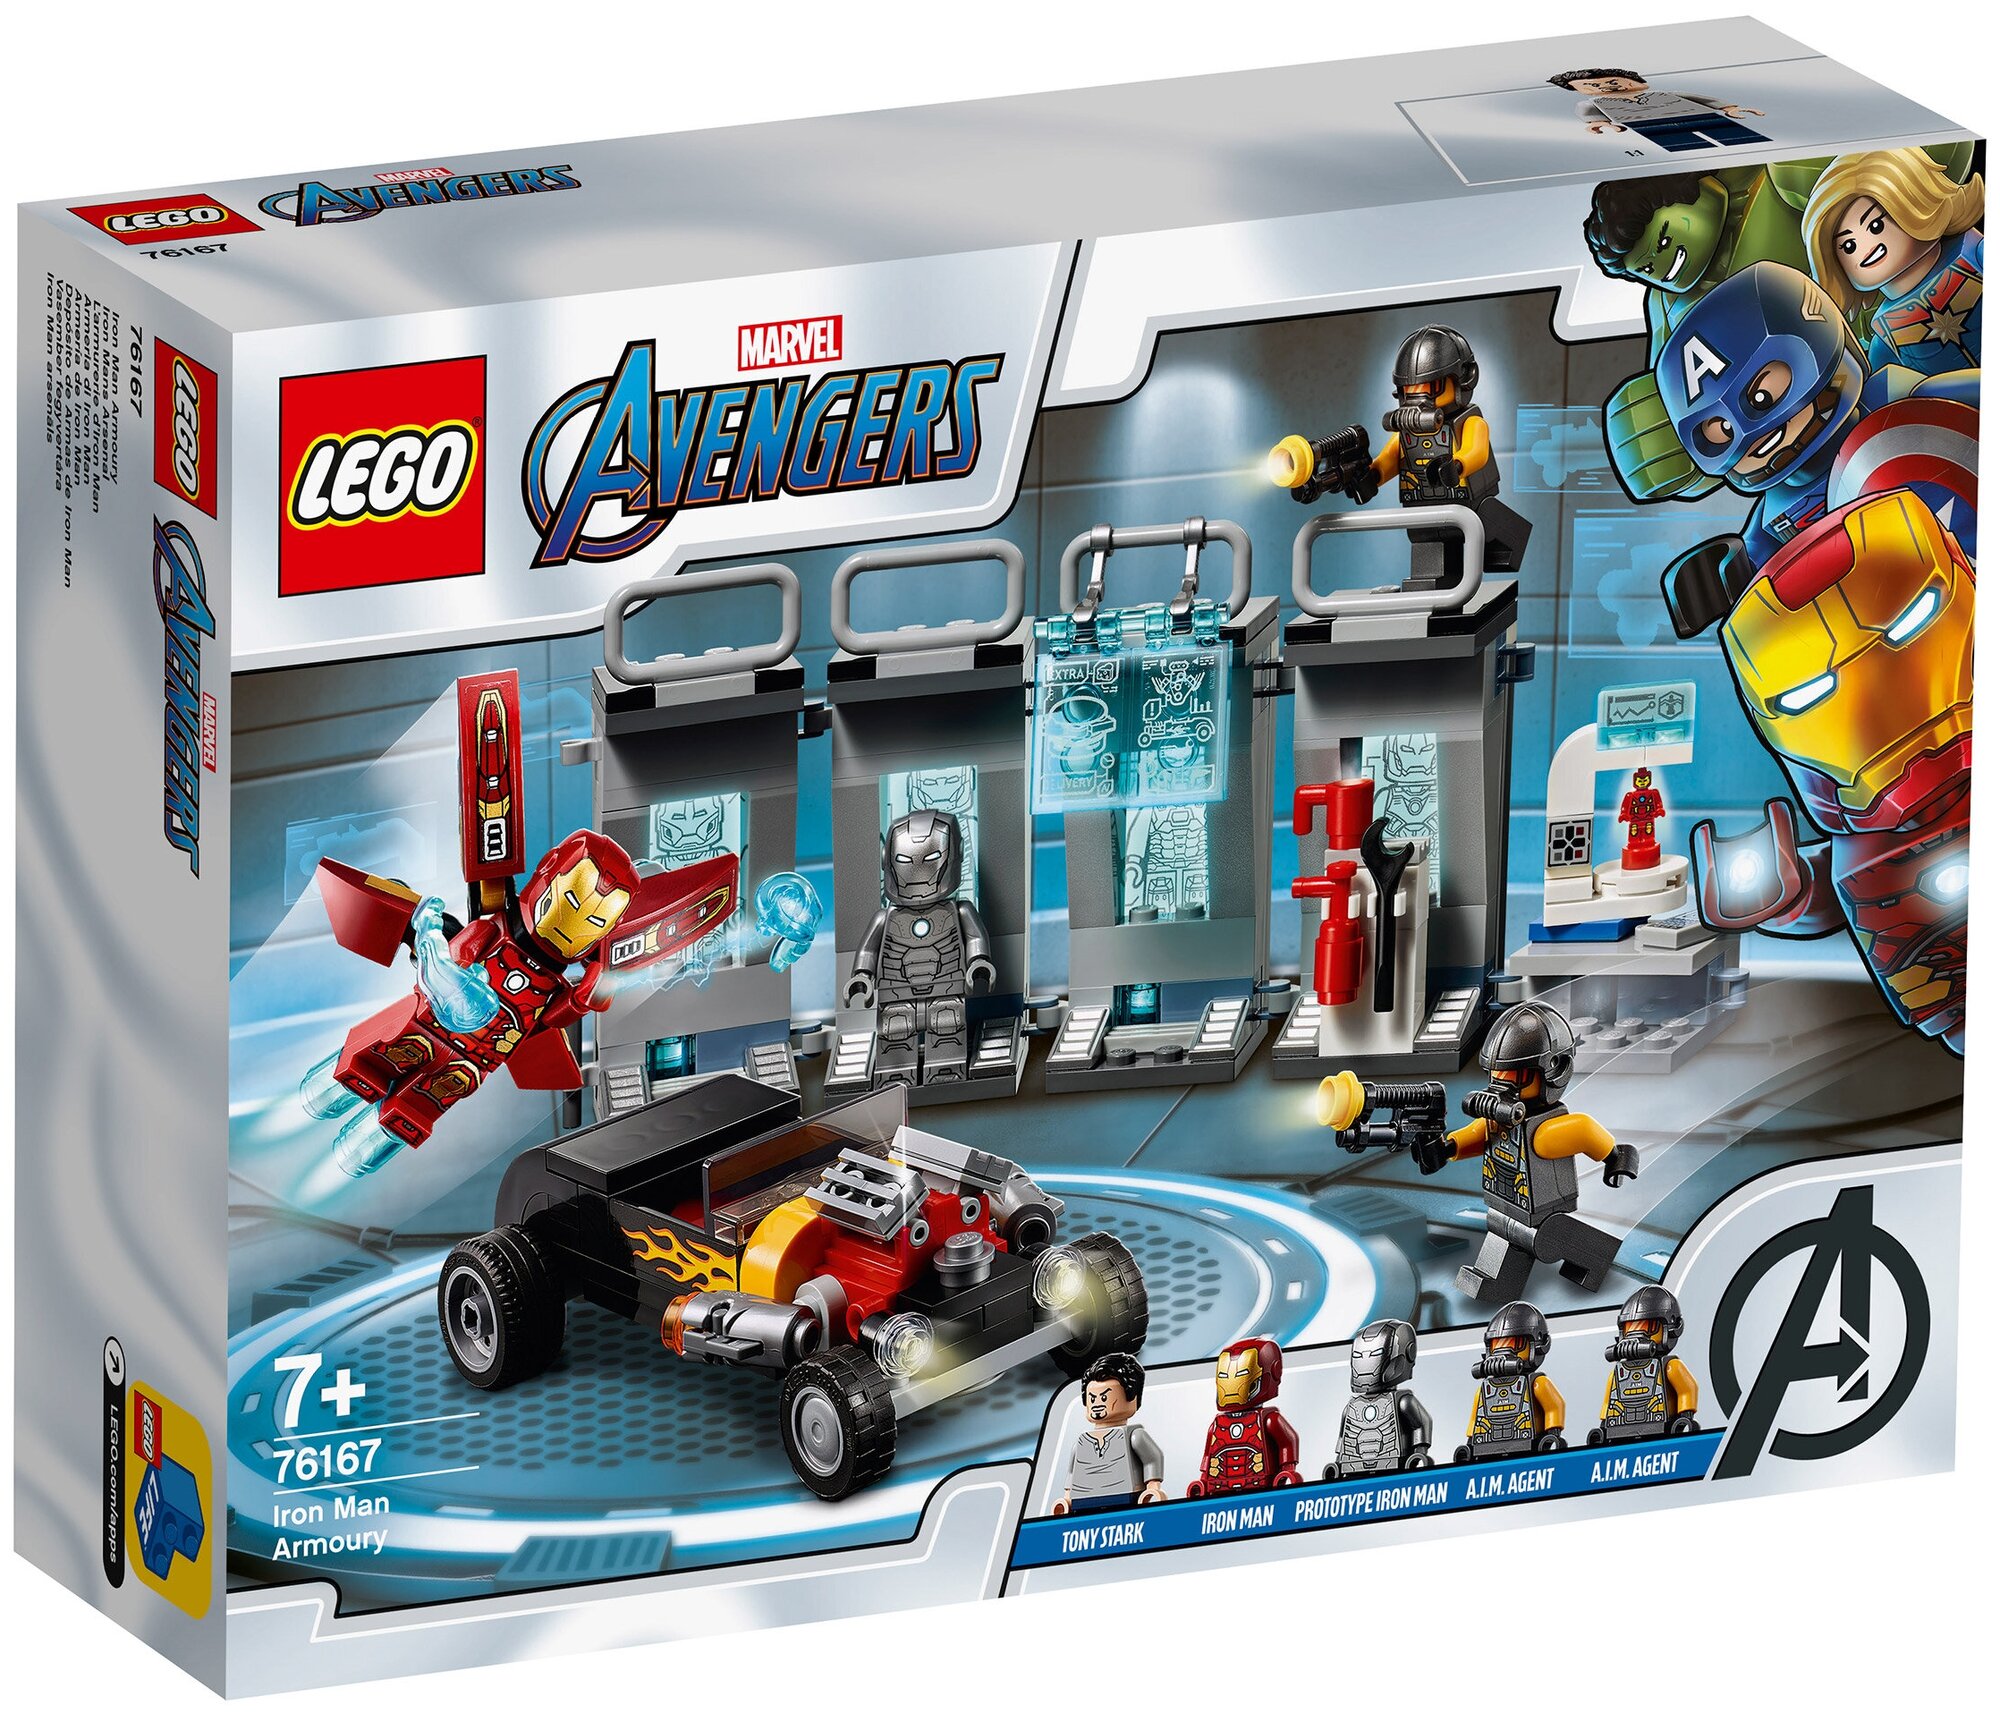 Конструктор LEGO Marvel Super Heroes 76167 Avengers Арсенал Железного человека, 258 дет.